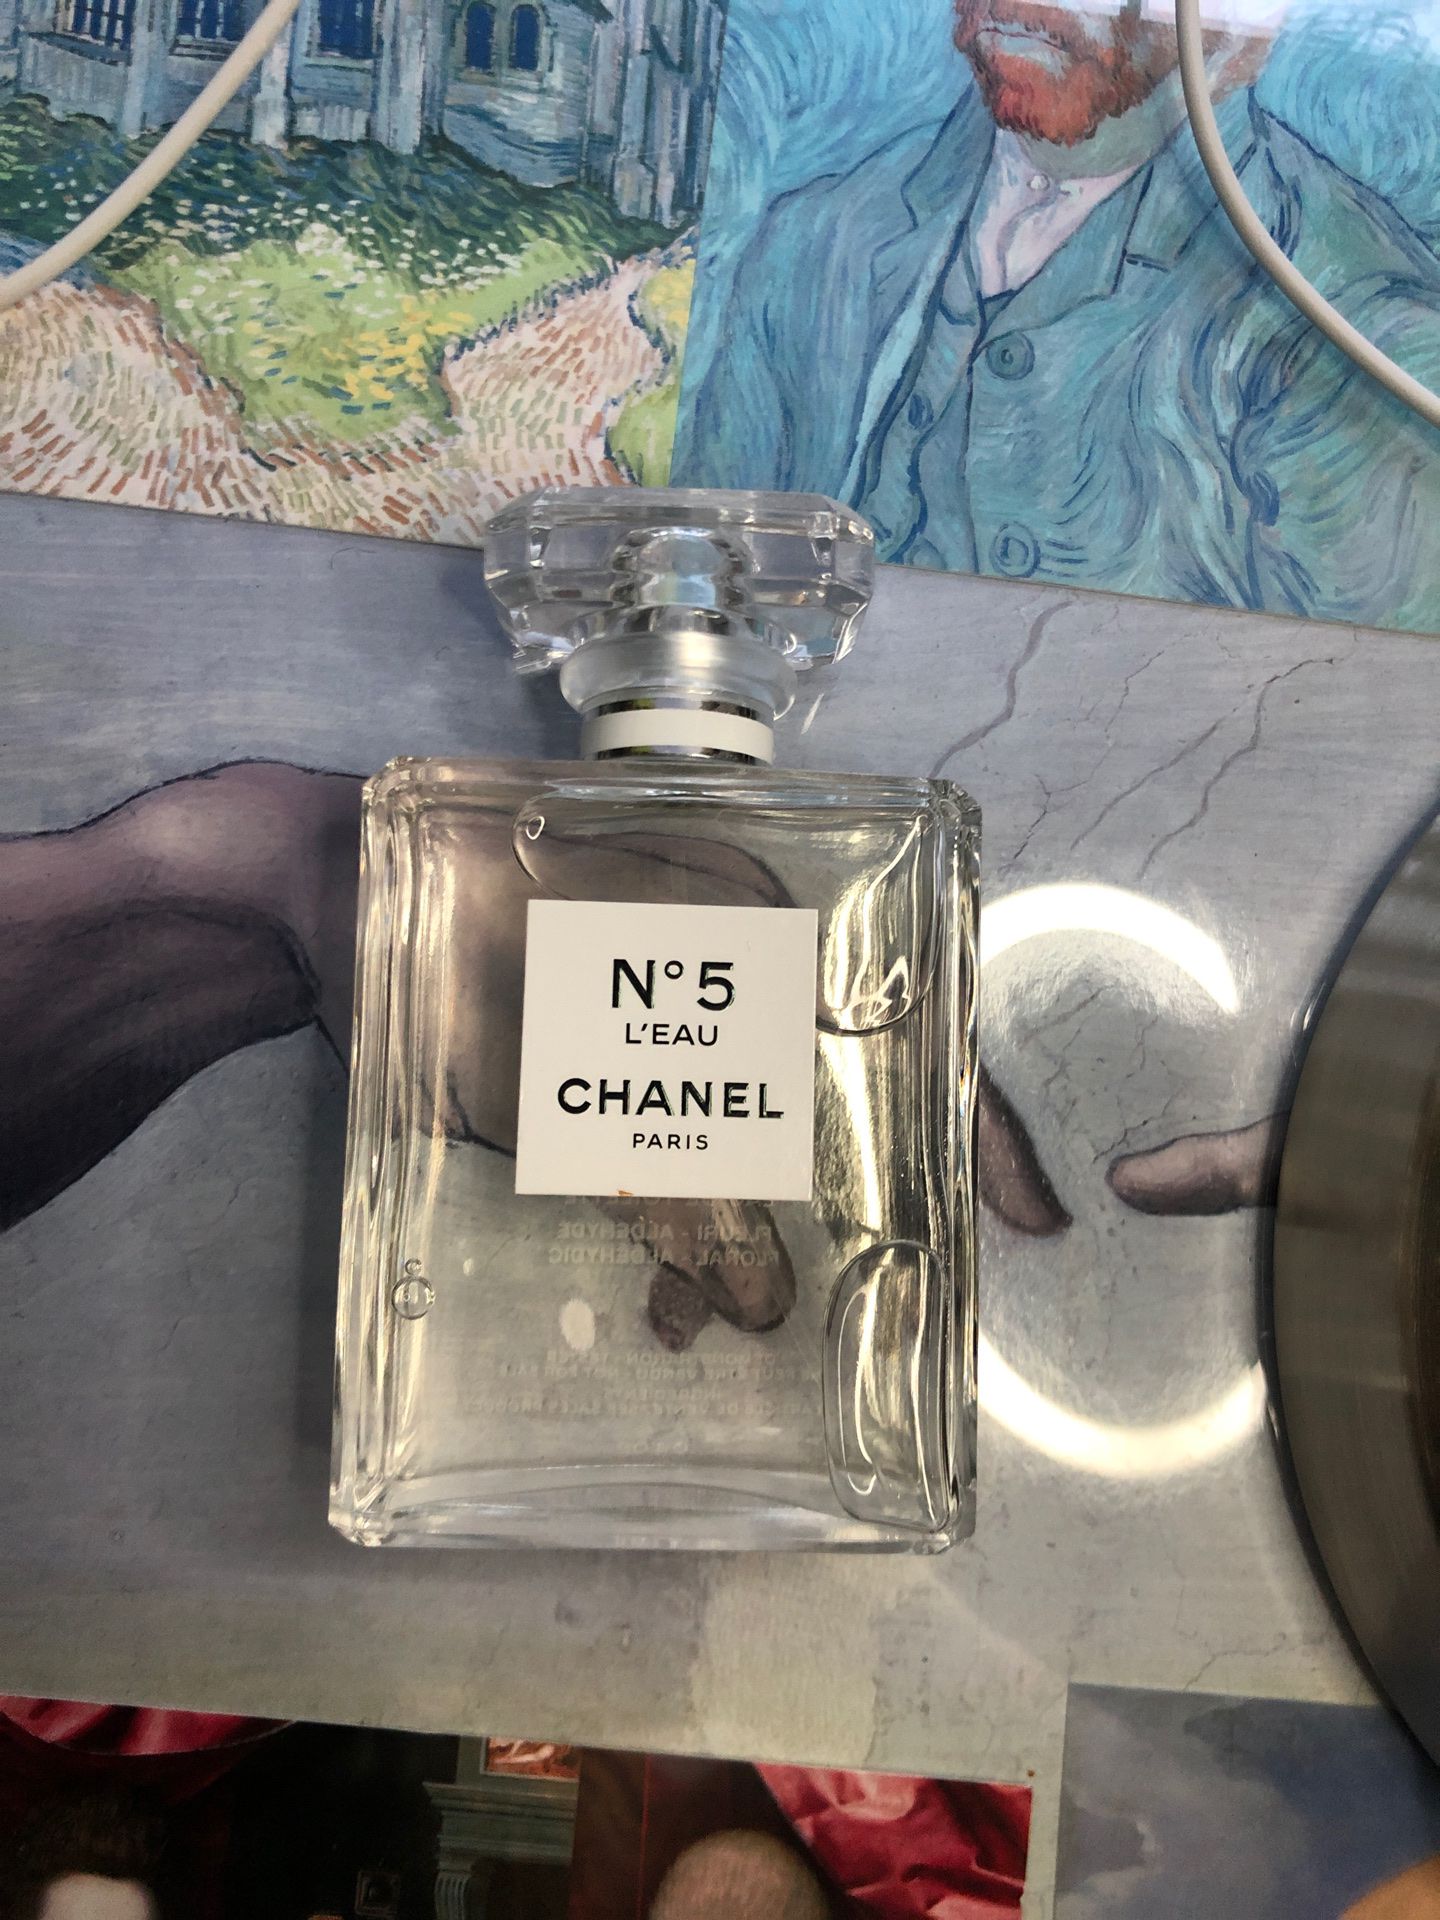 Chanel no 5 floral perfume